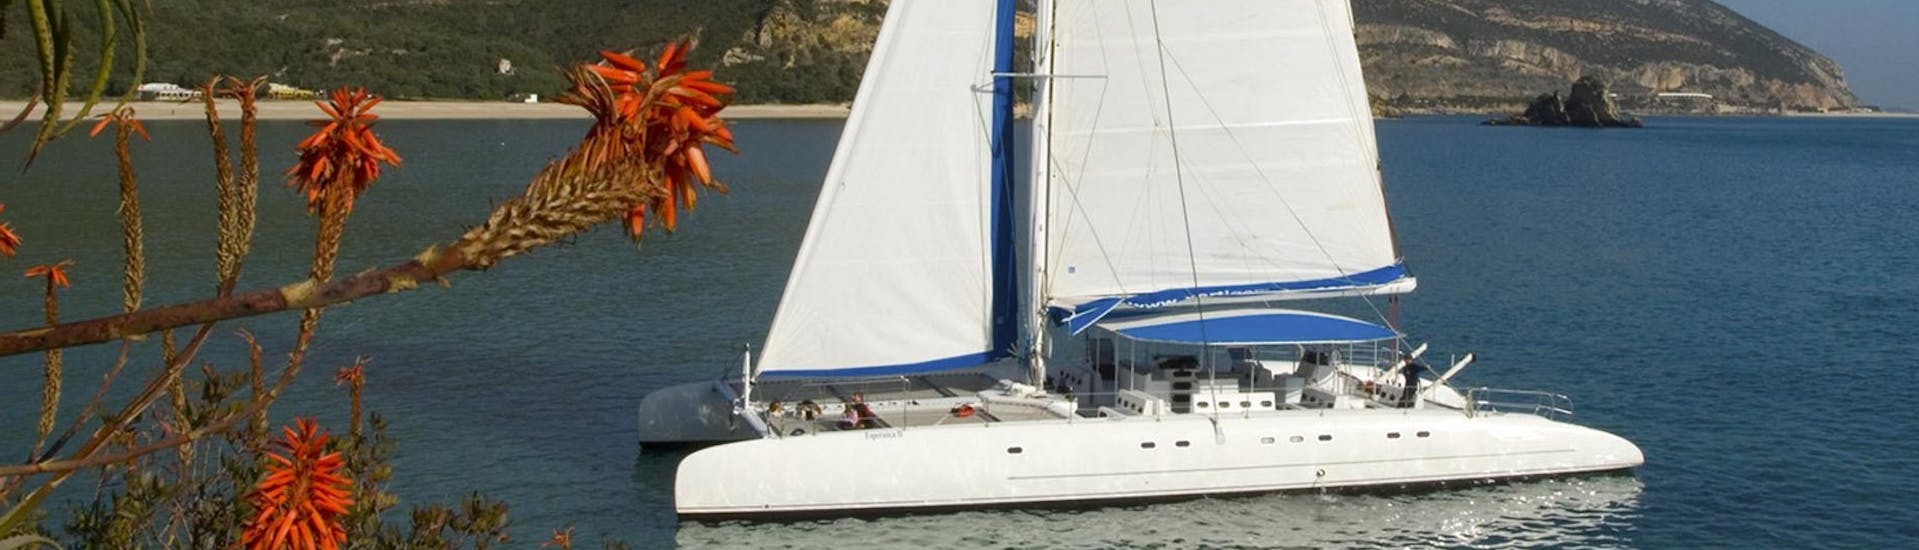 Balade en catamaran Troia avec Observation de la faune & Visites touristiques.